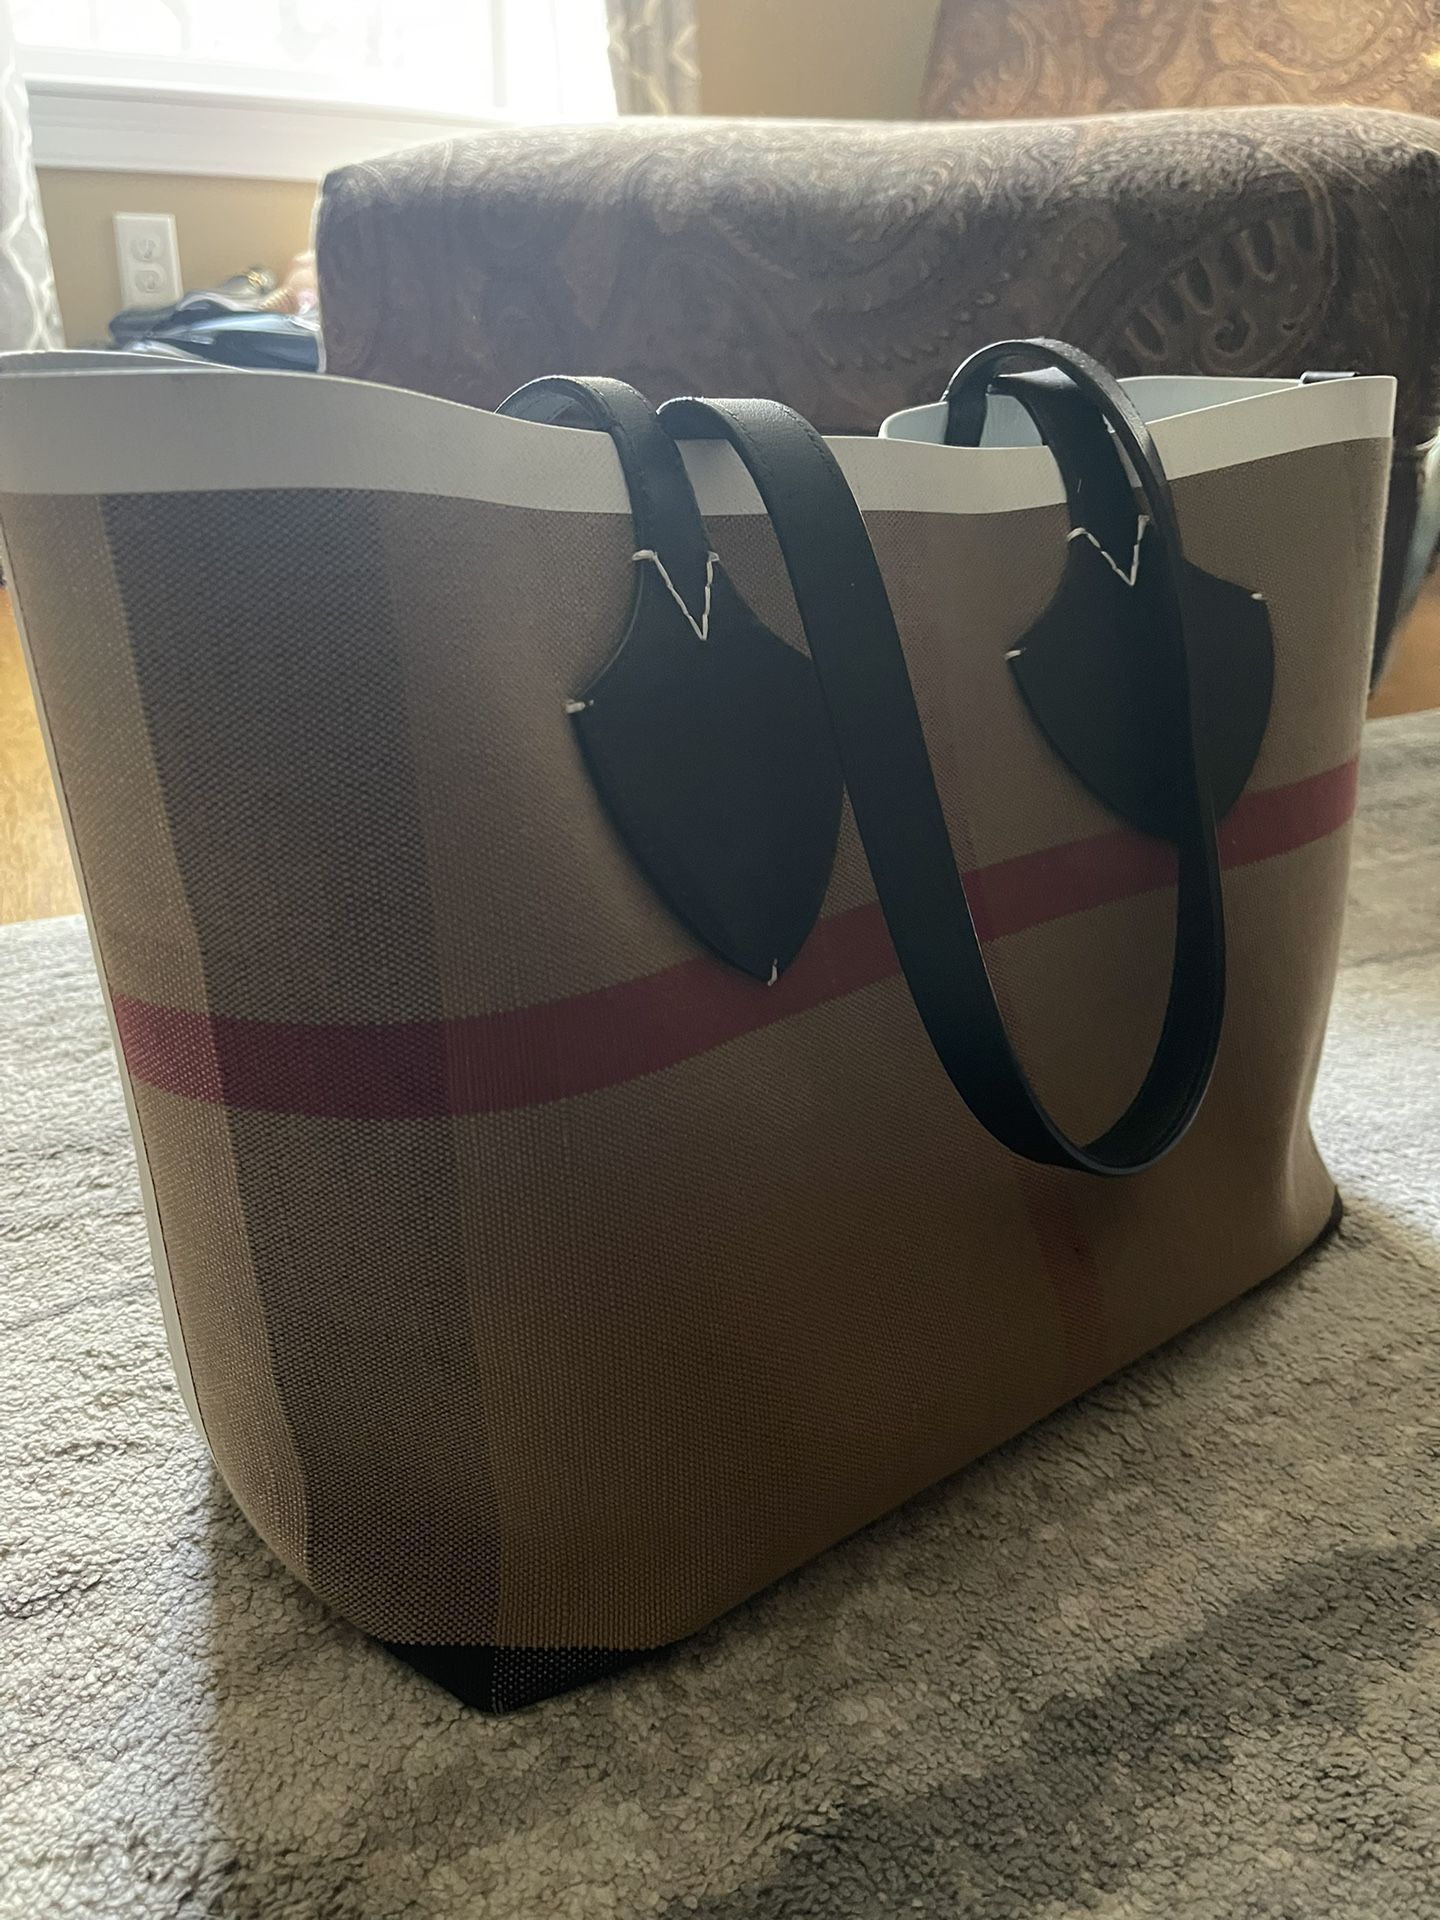 Burberry Tote Bag